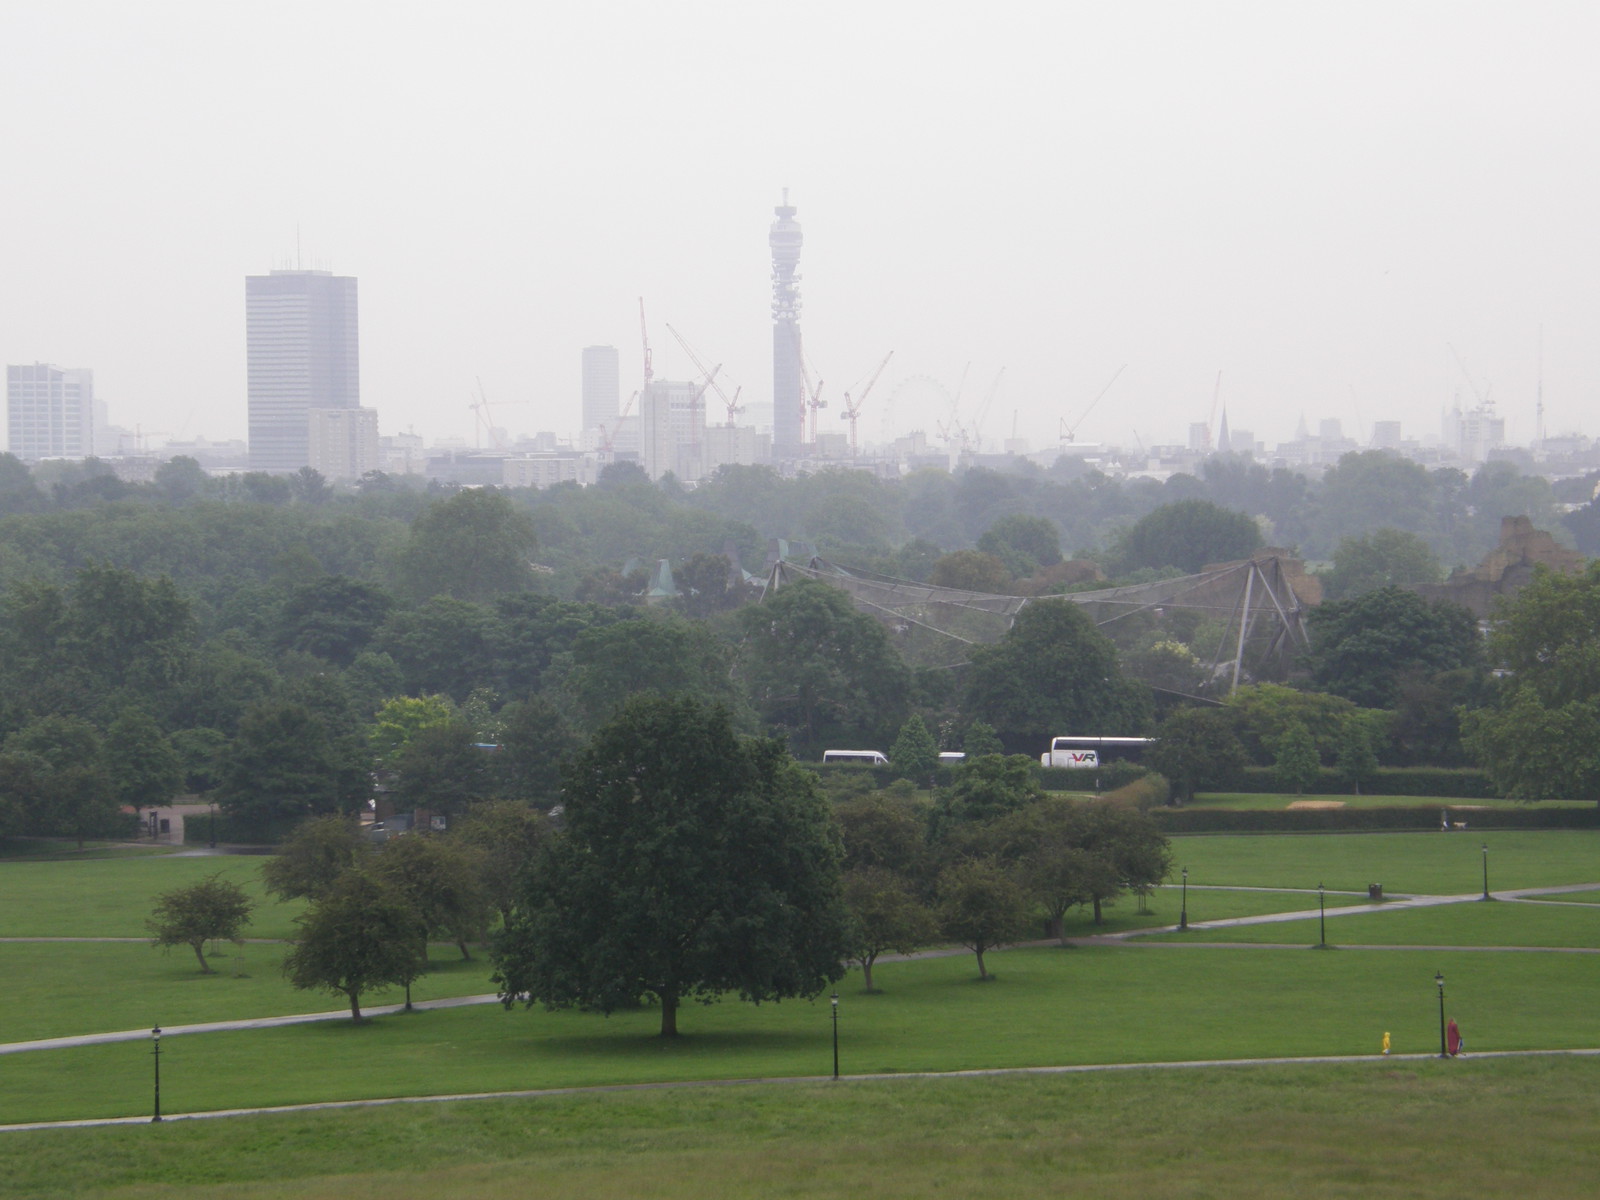 A rainy London skyline from Primrose Hill